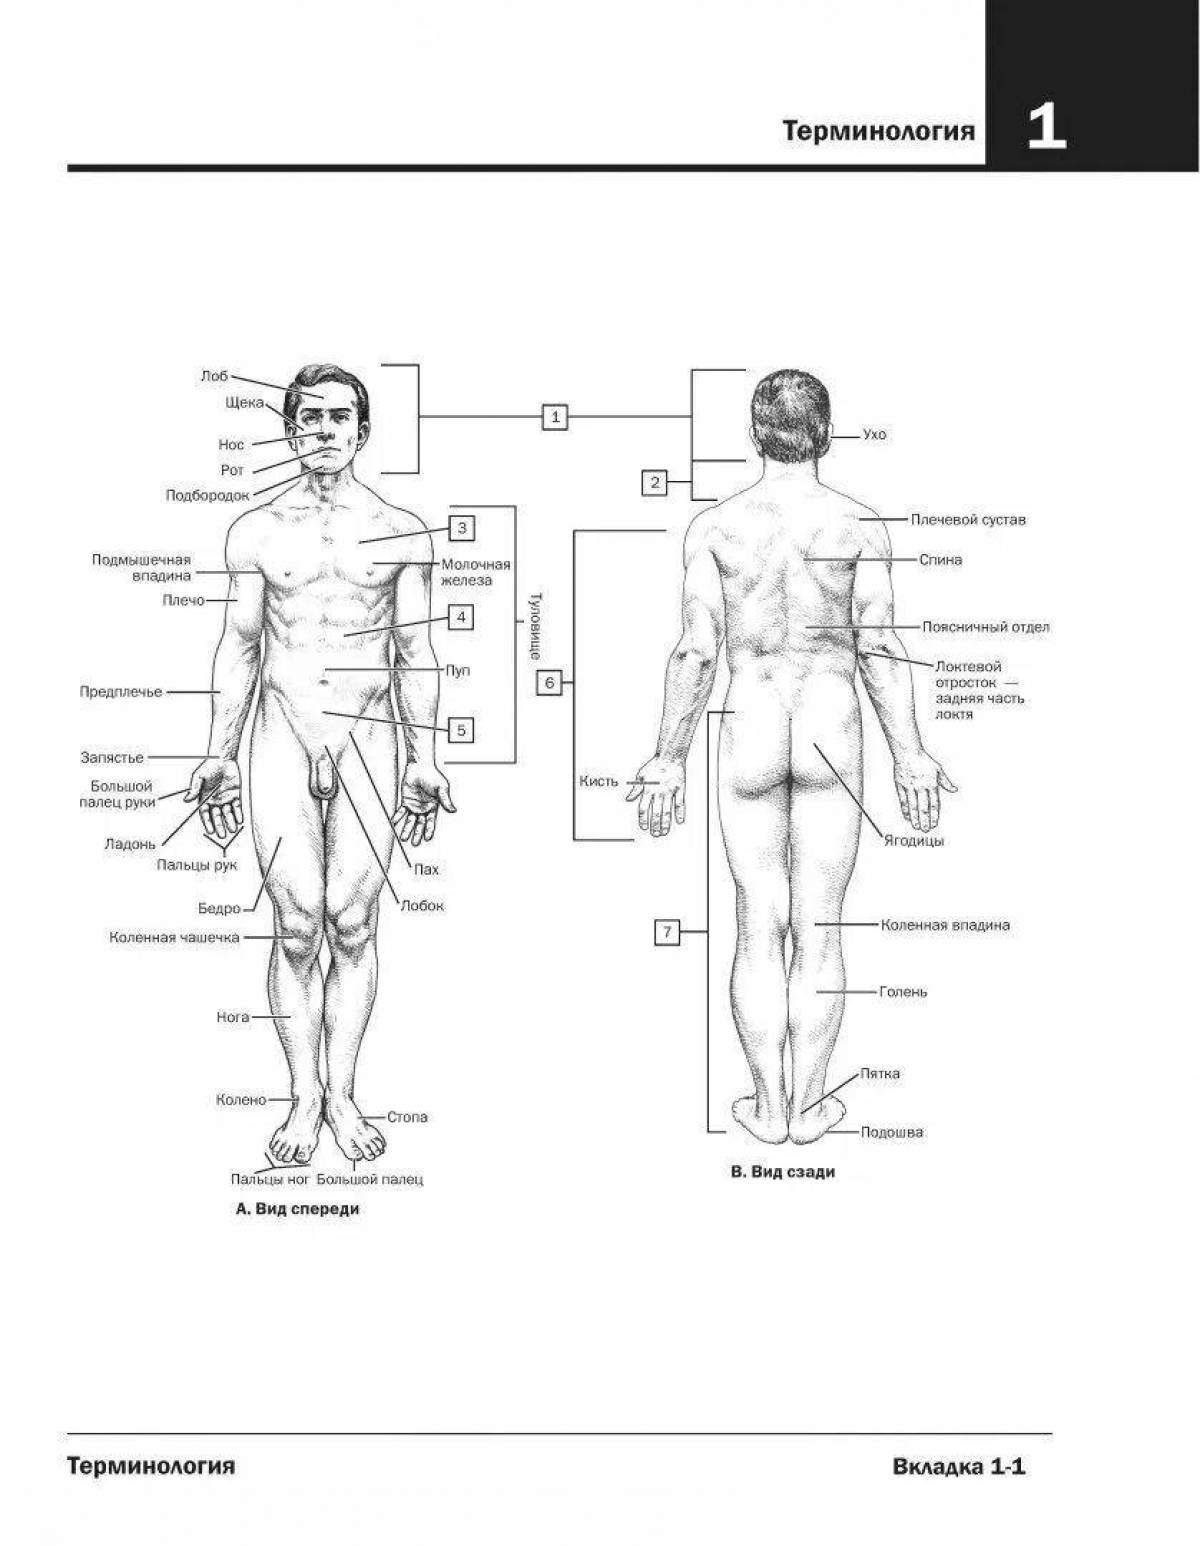 Detailed atlas of human anatomy pdf